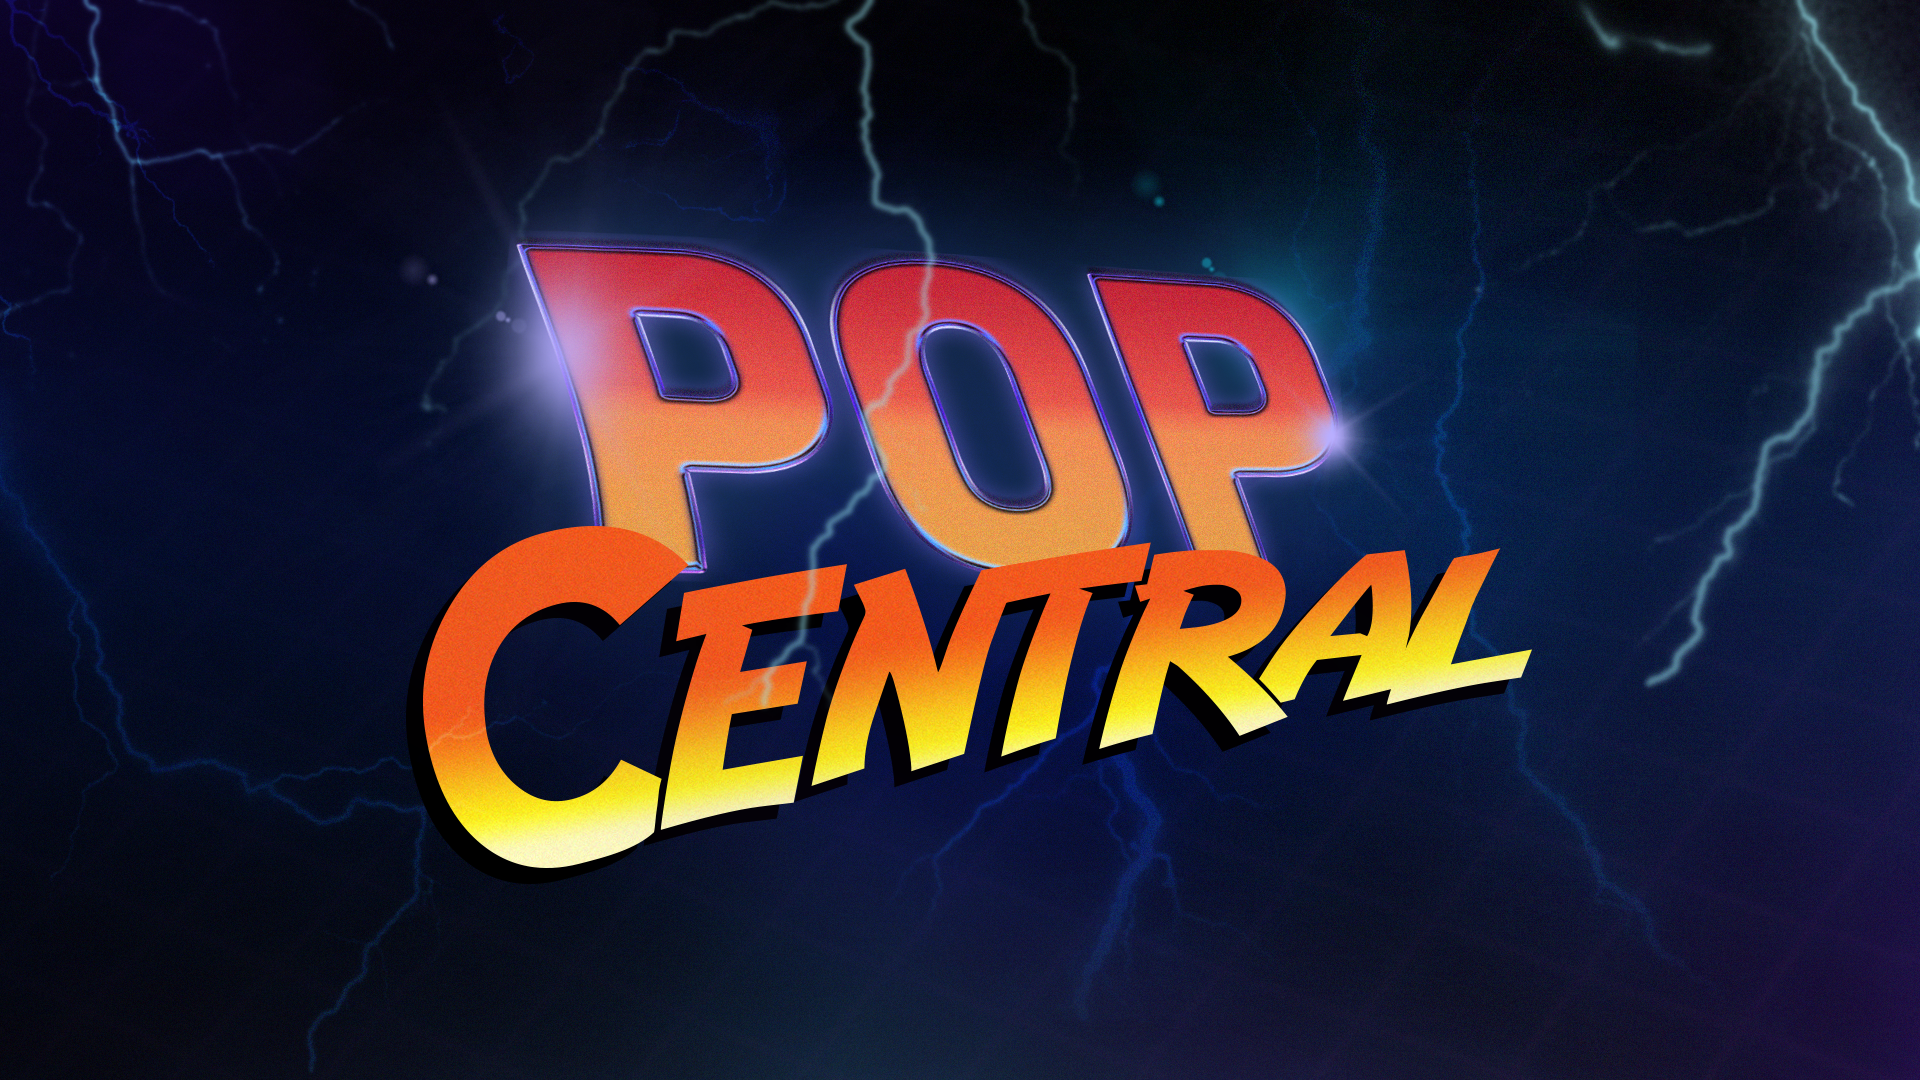 "Pop Central "Affiche